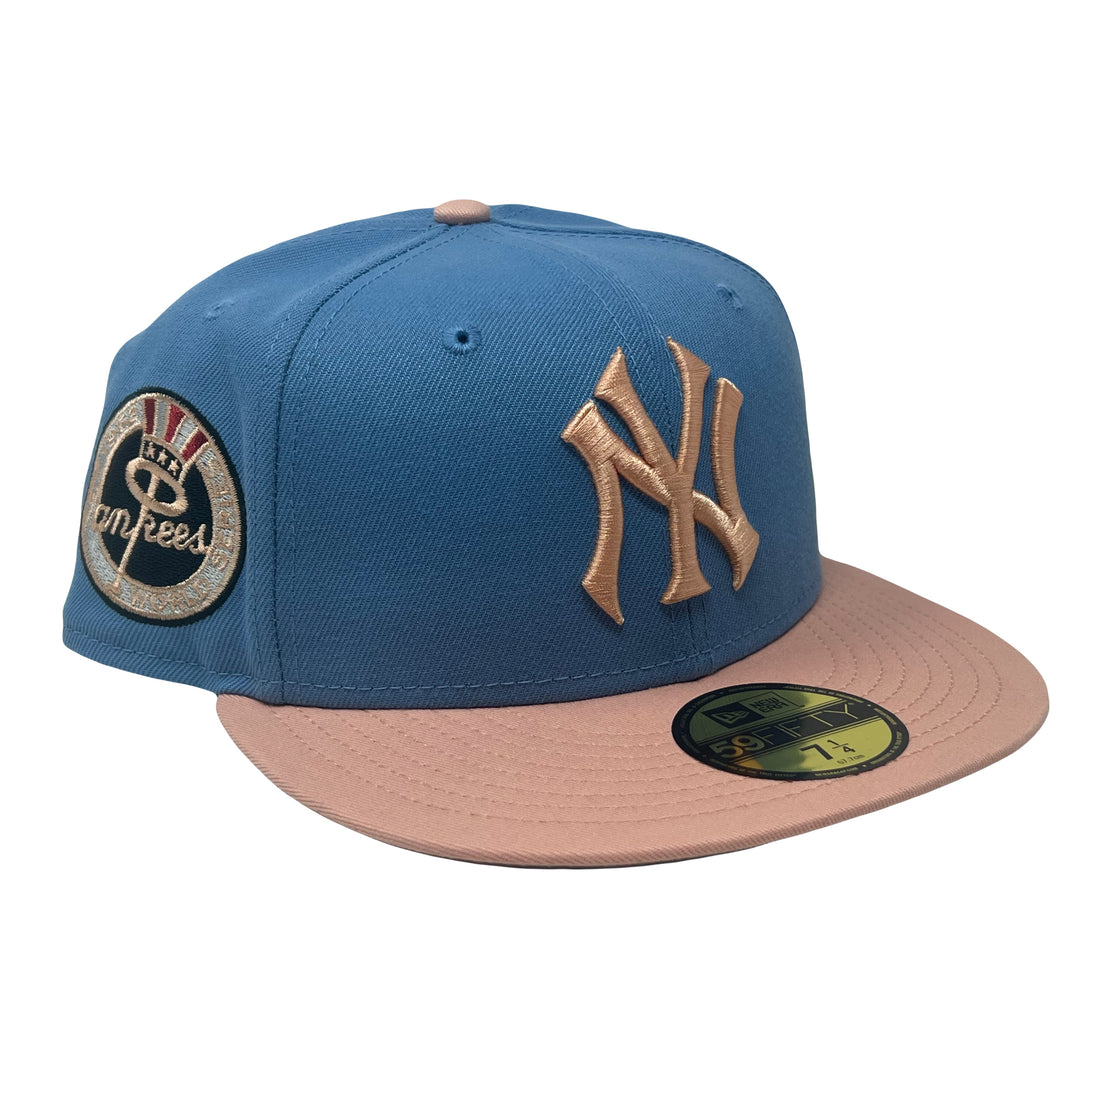 New York Yankees 1962 World Series New Era Fitted Hat